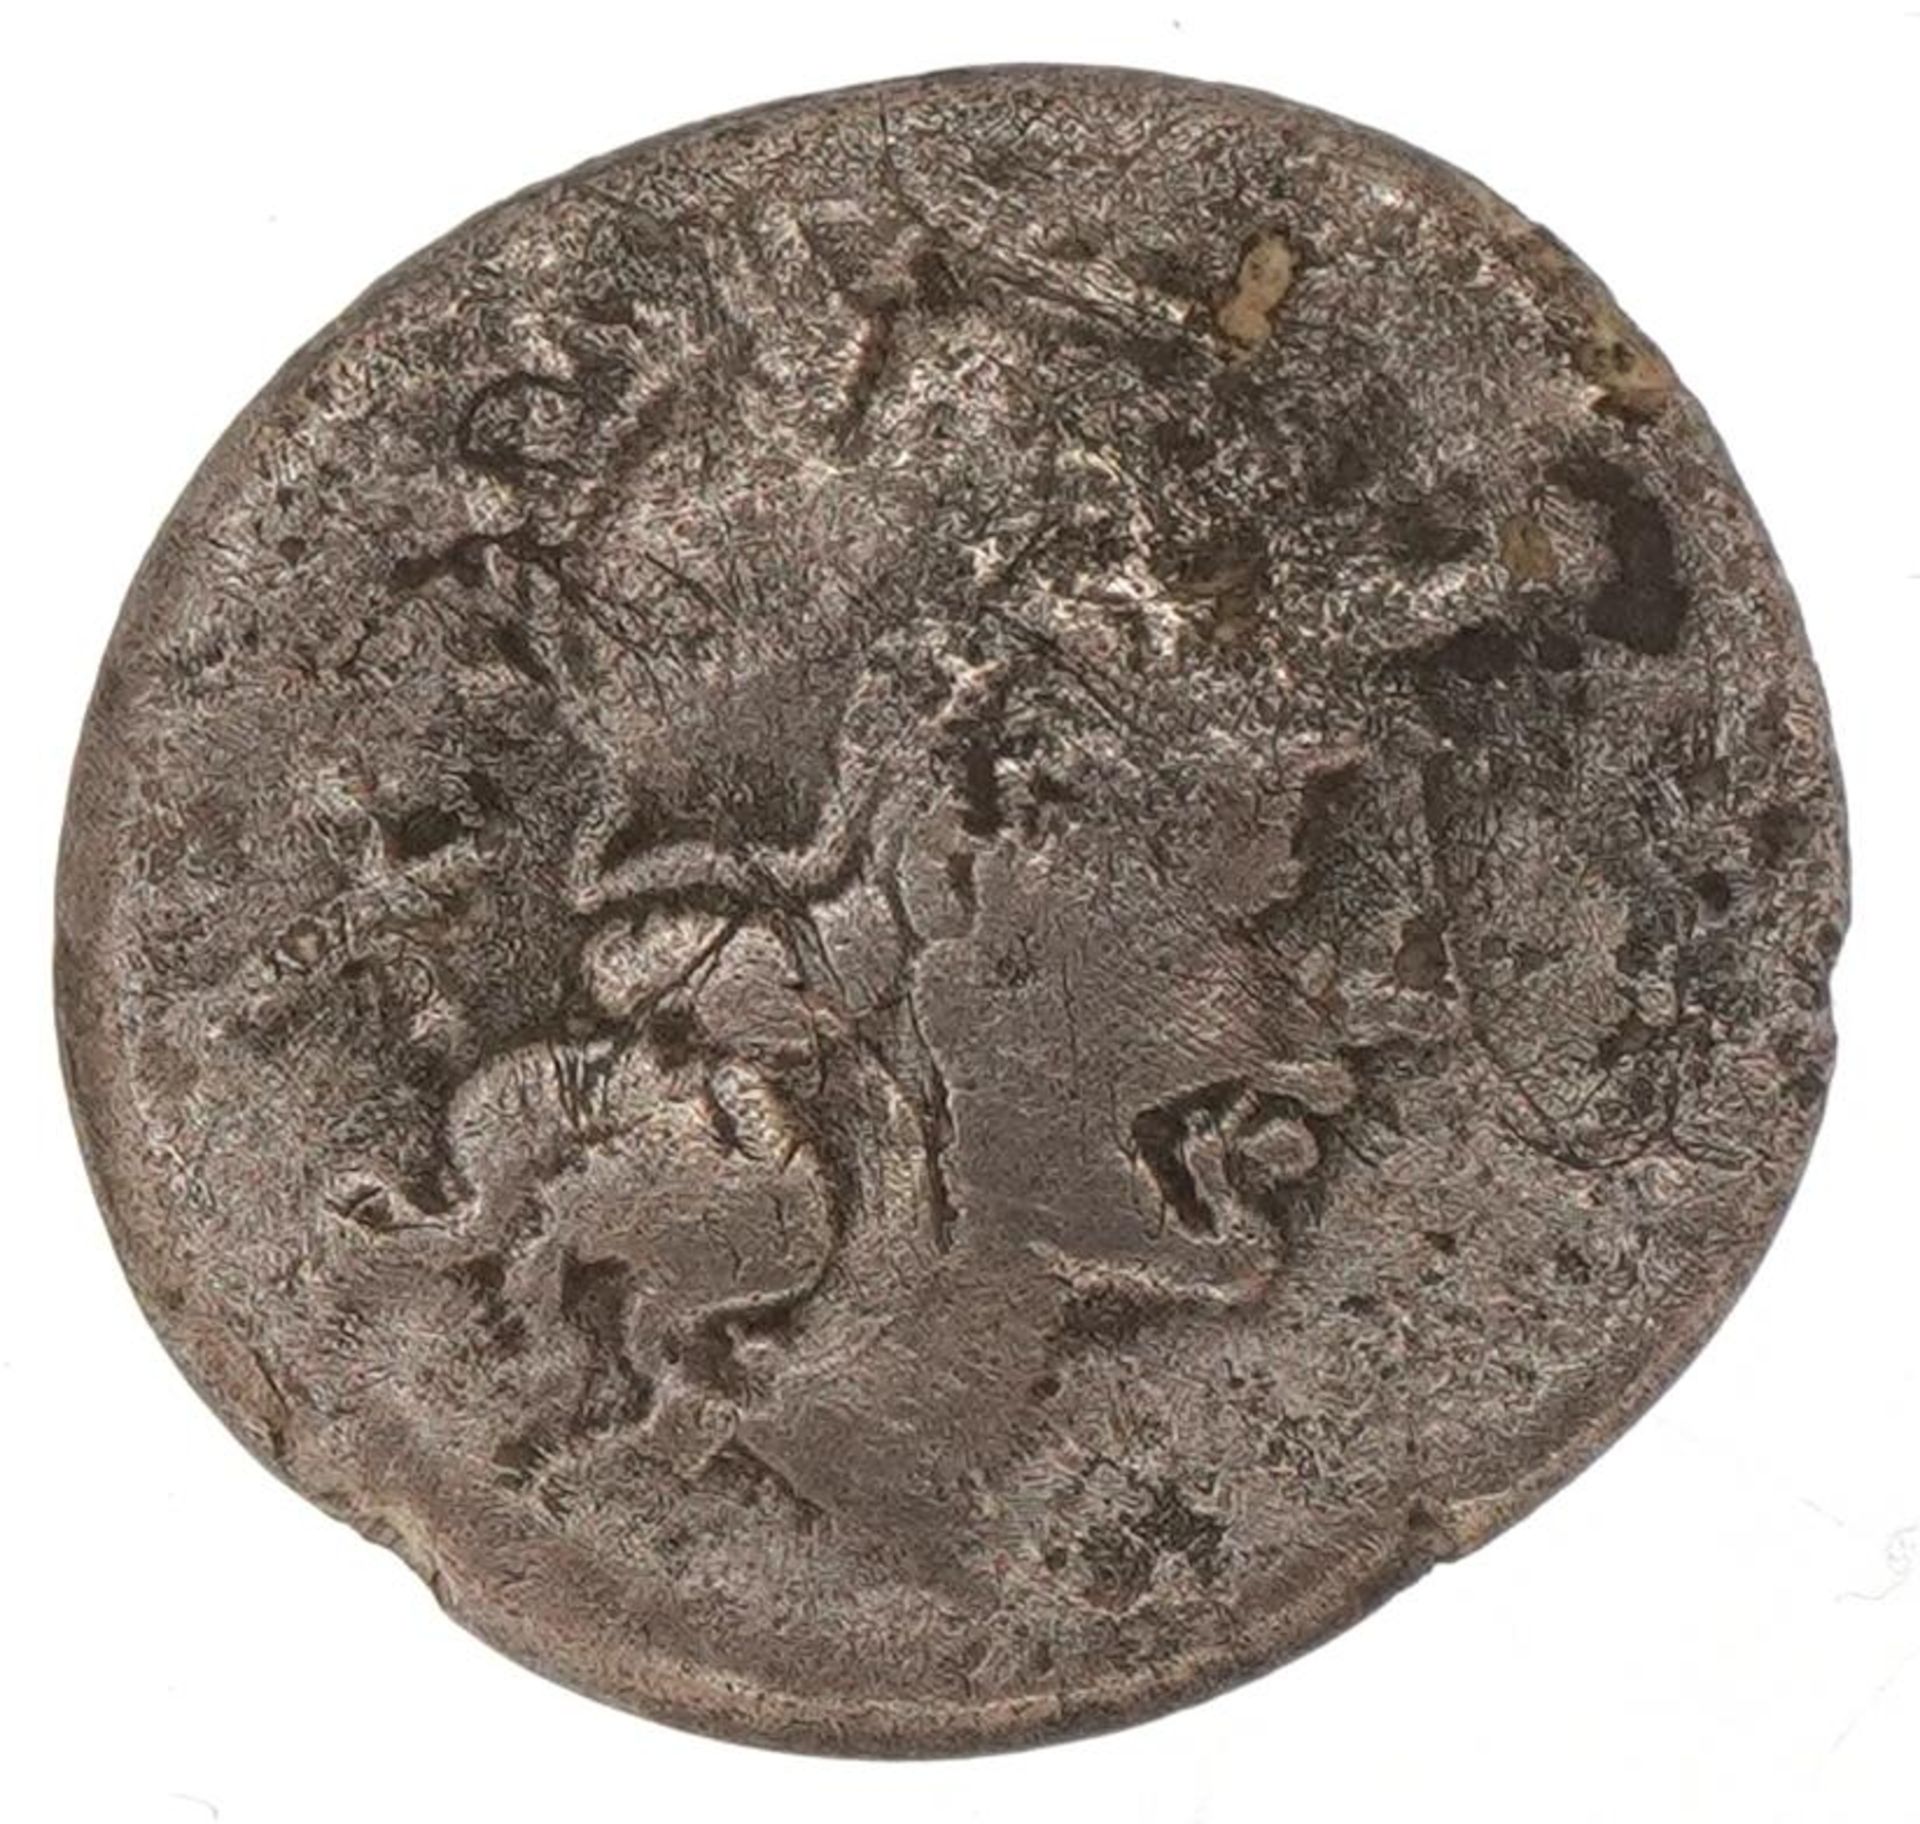 Ancient Greek silver coin